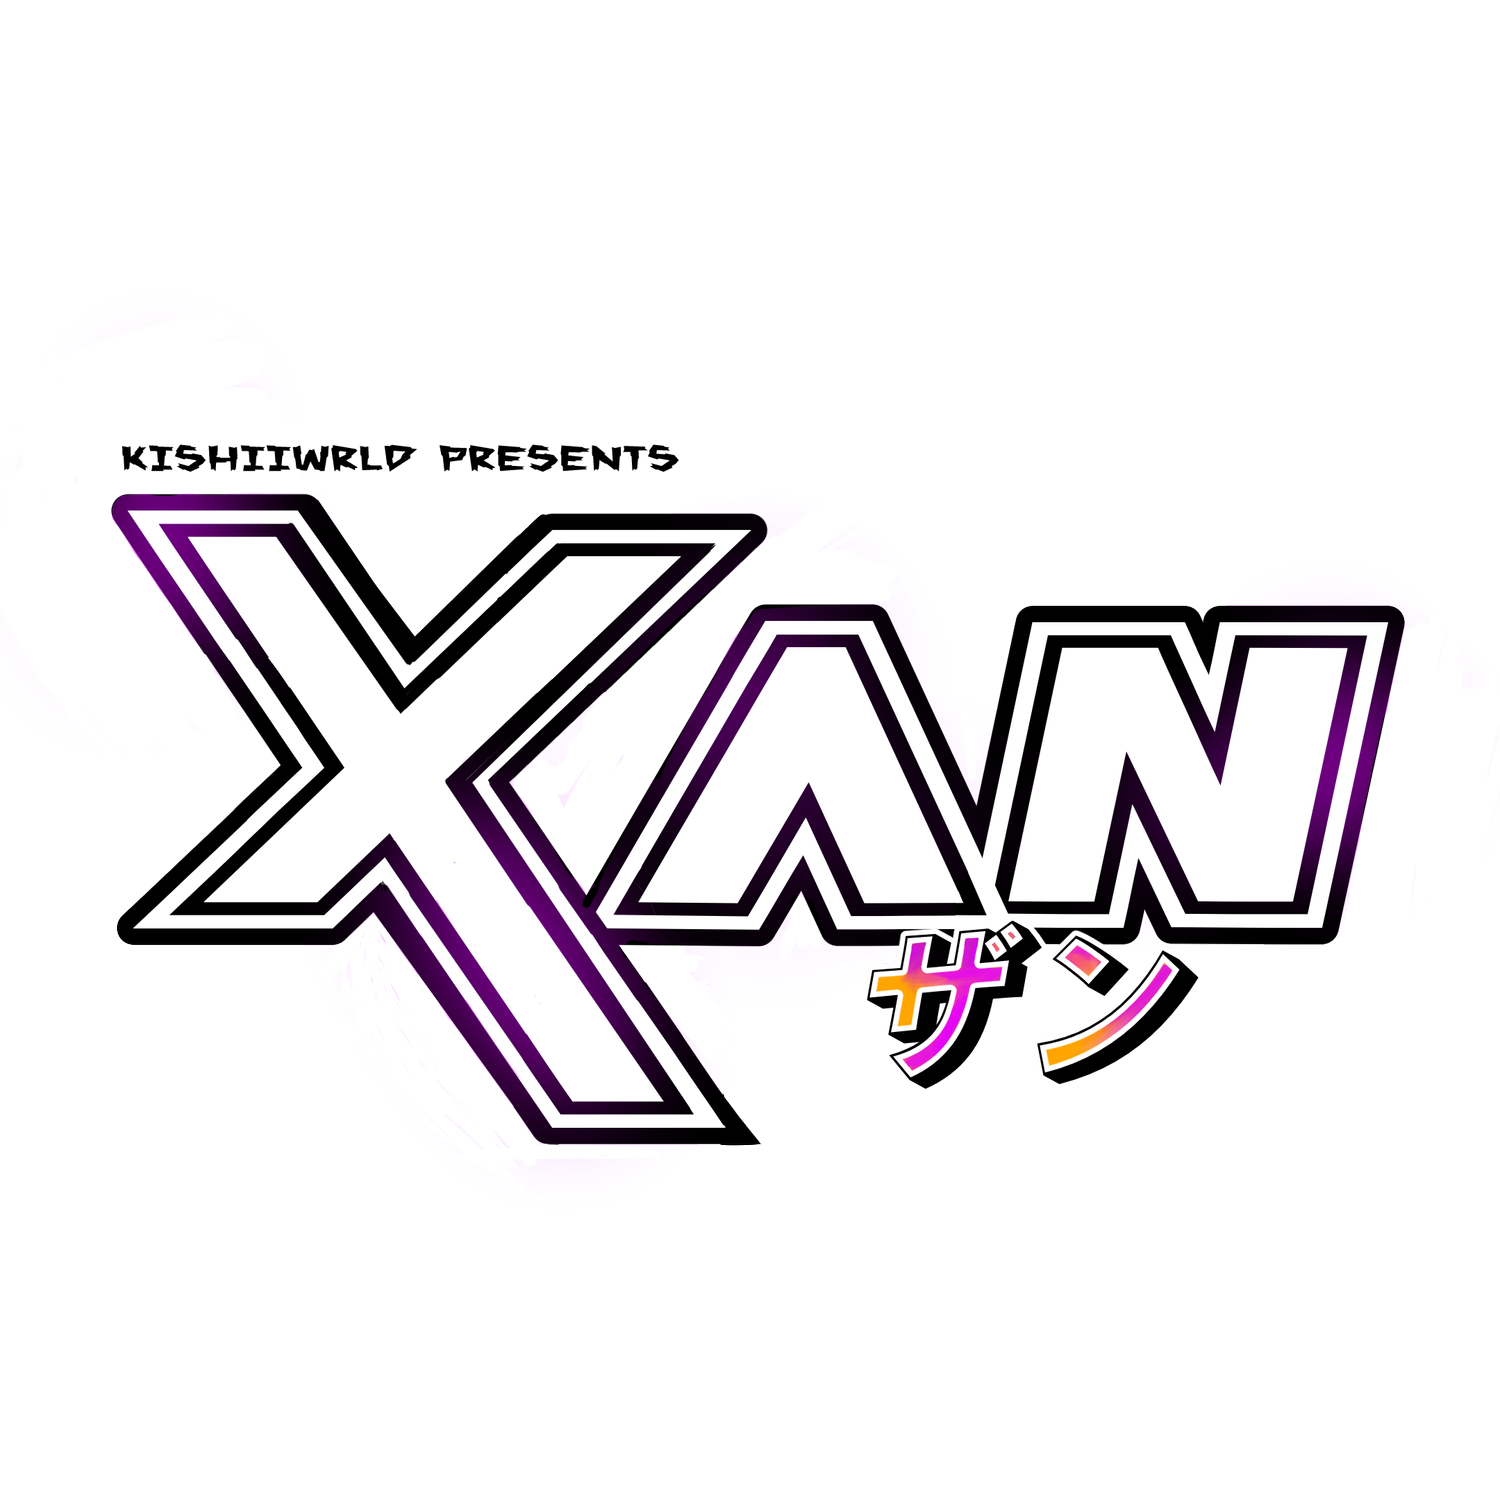 XAN: THE OFFICIAL MANGA